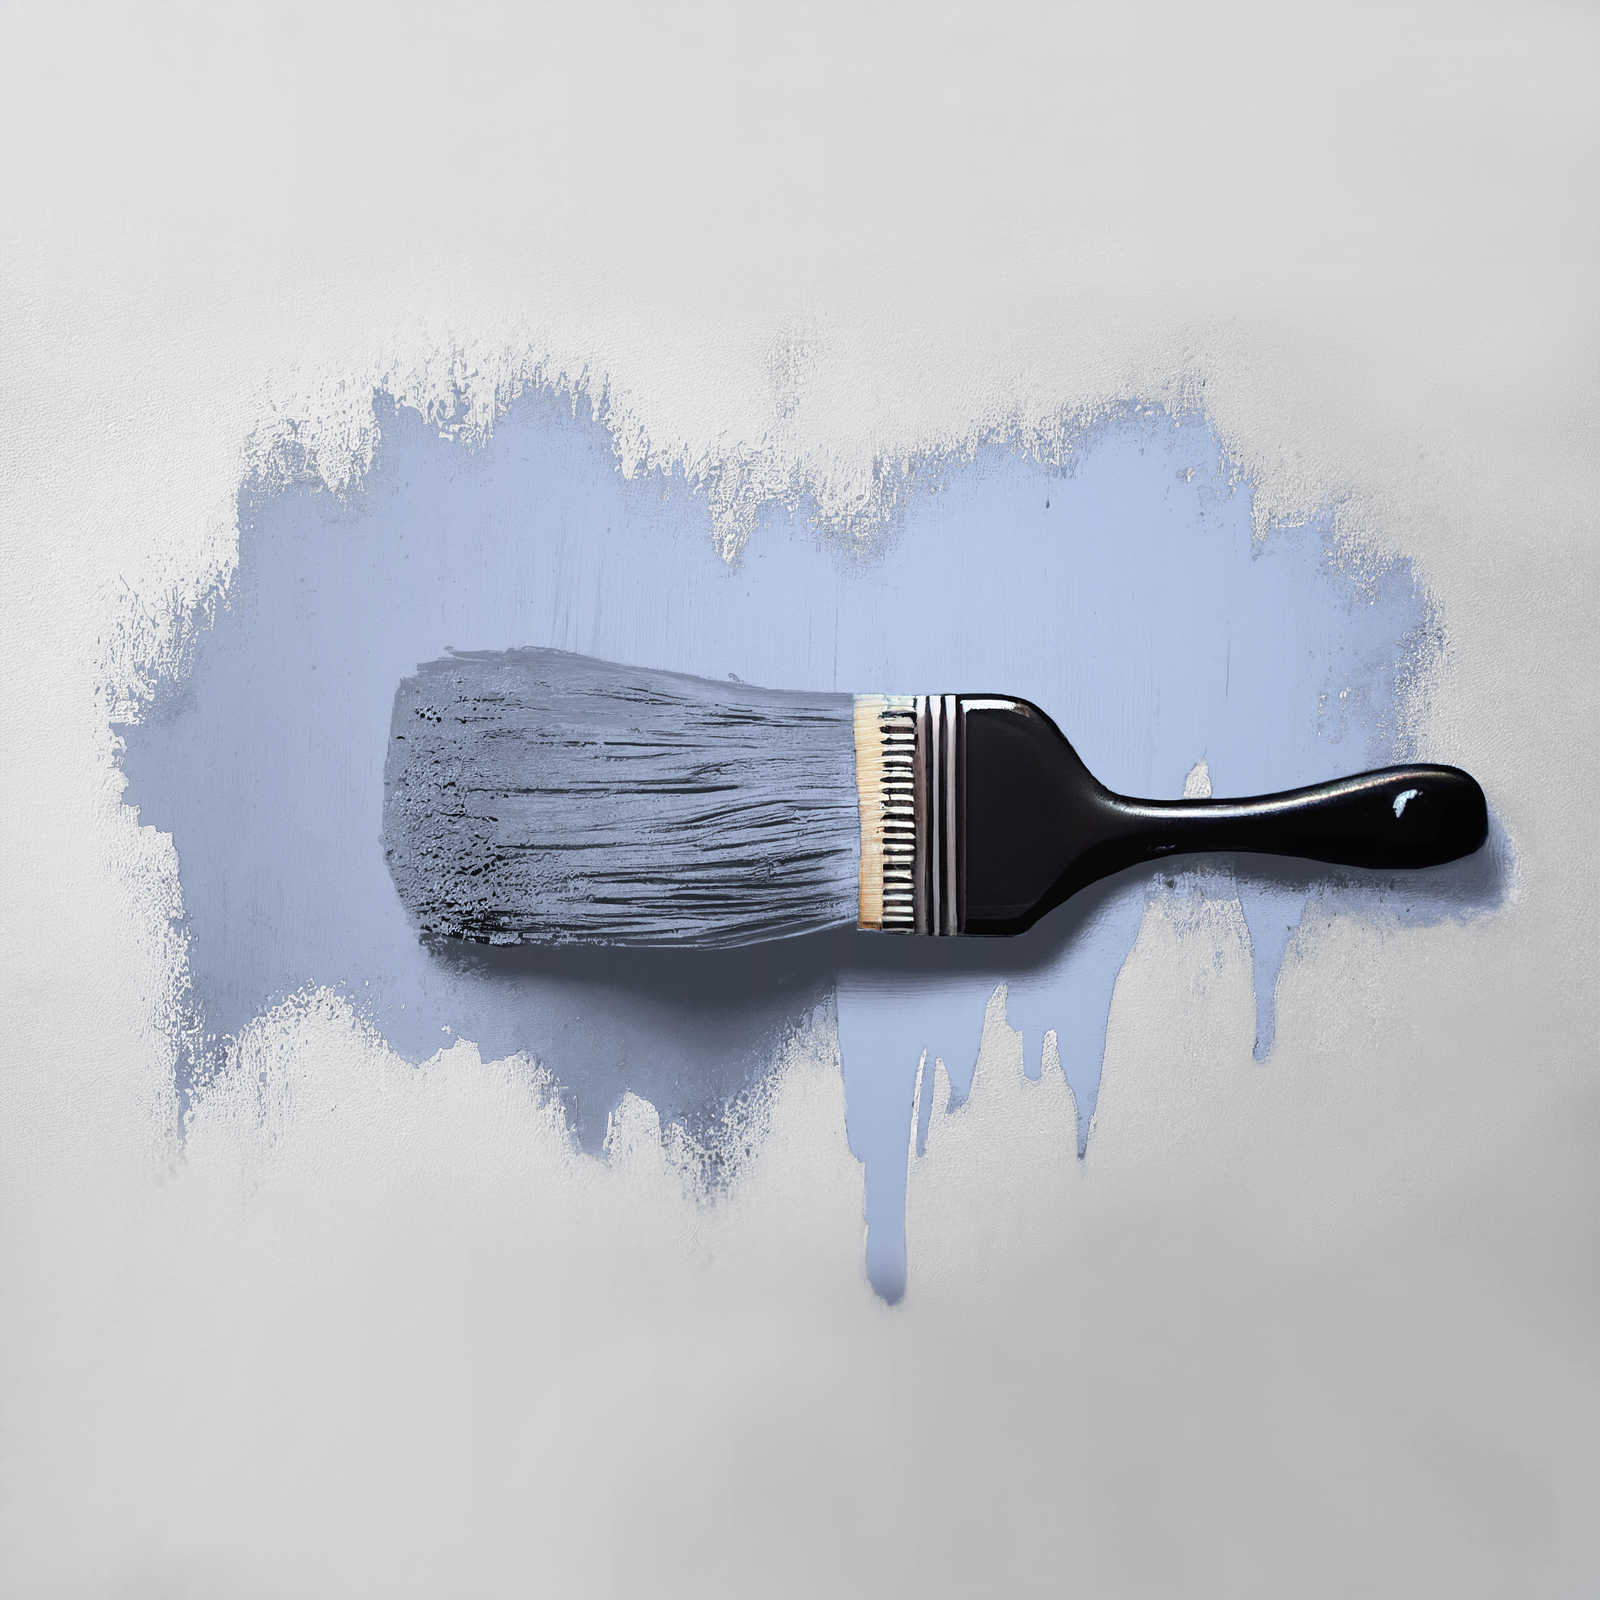             Pittura murale TCK3006 »Cake Pop« in bel viola – 2,5 litri
        